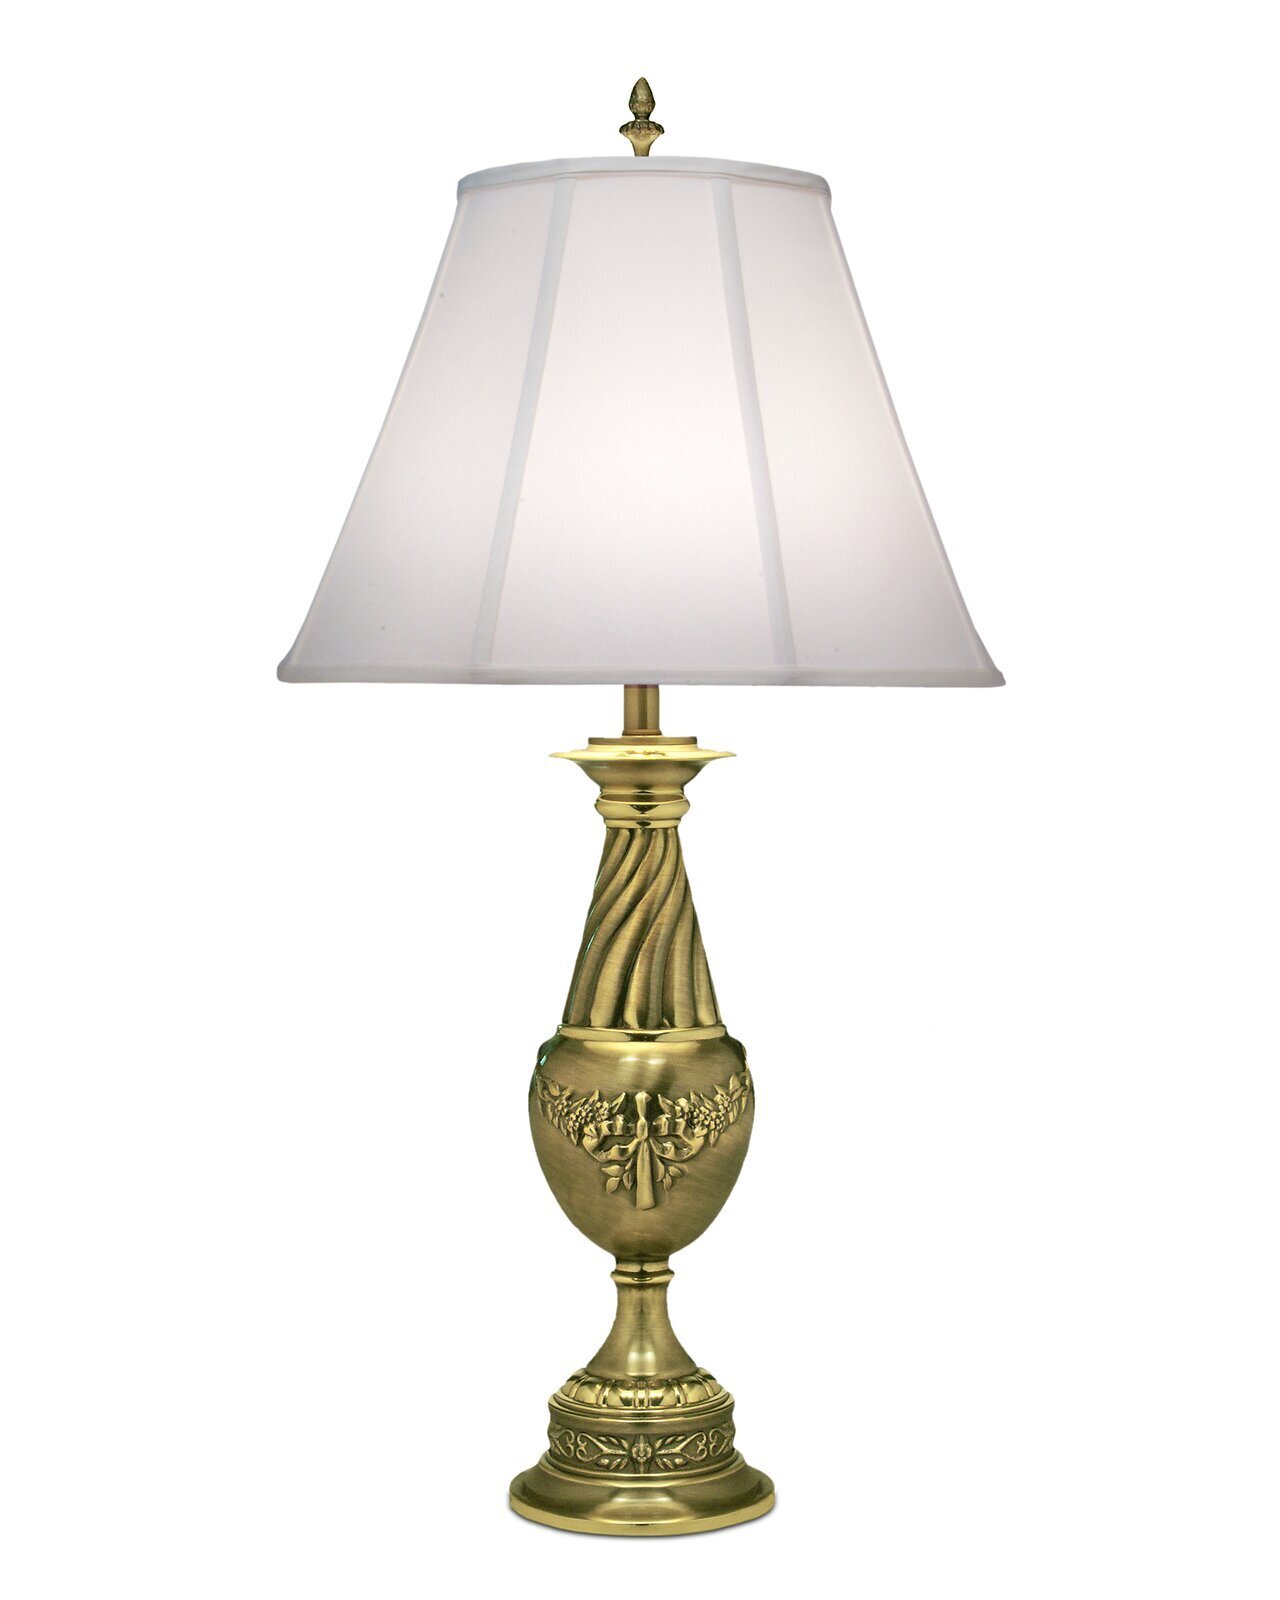 Stiffel lamp with empire shade